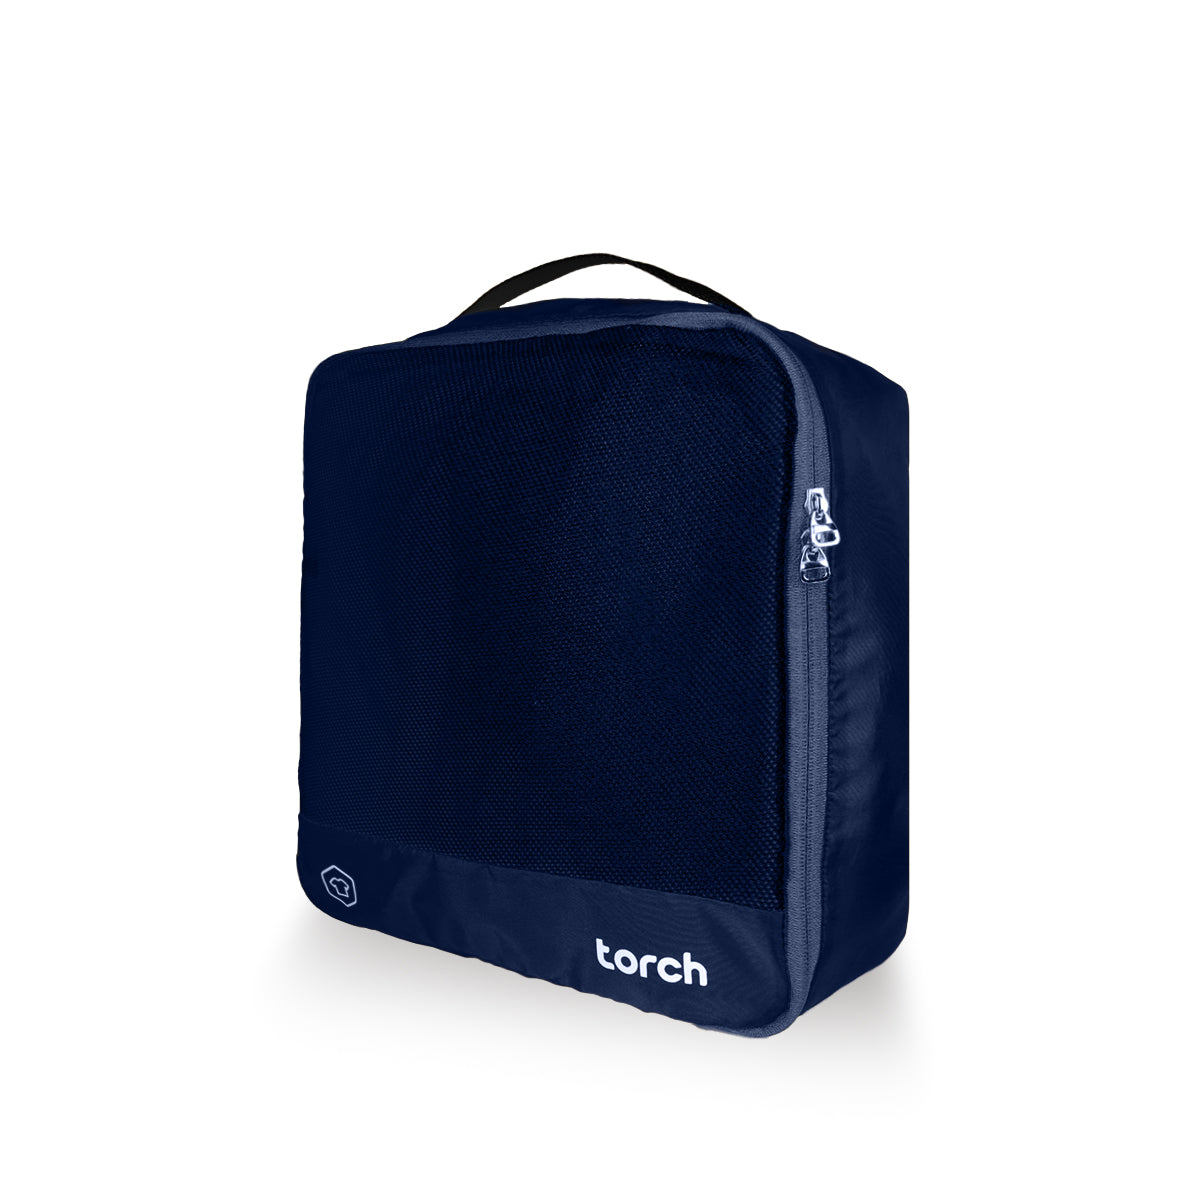 Paket Traveling - Takahagi Travel Backpack Gratis Dafi Shoe Pack + Dafi Cloth Pack L + Dafi Multi Pouch M